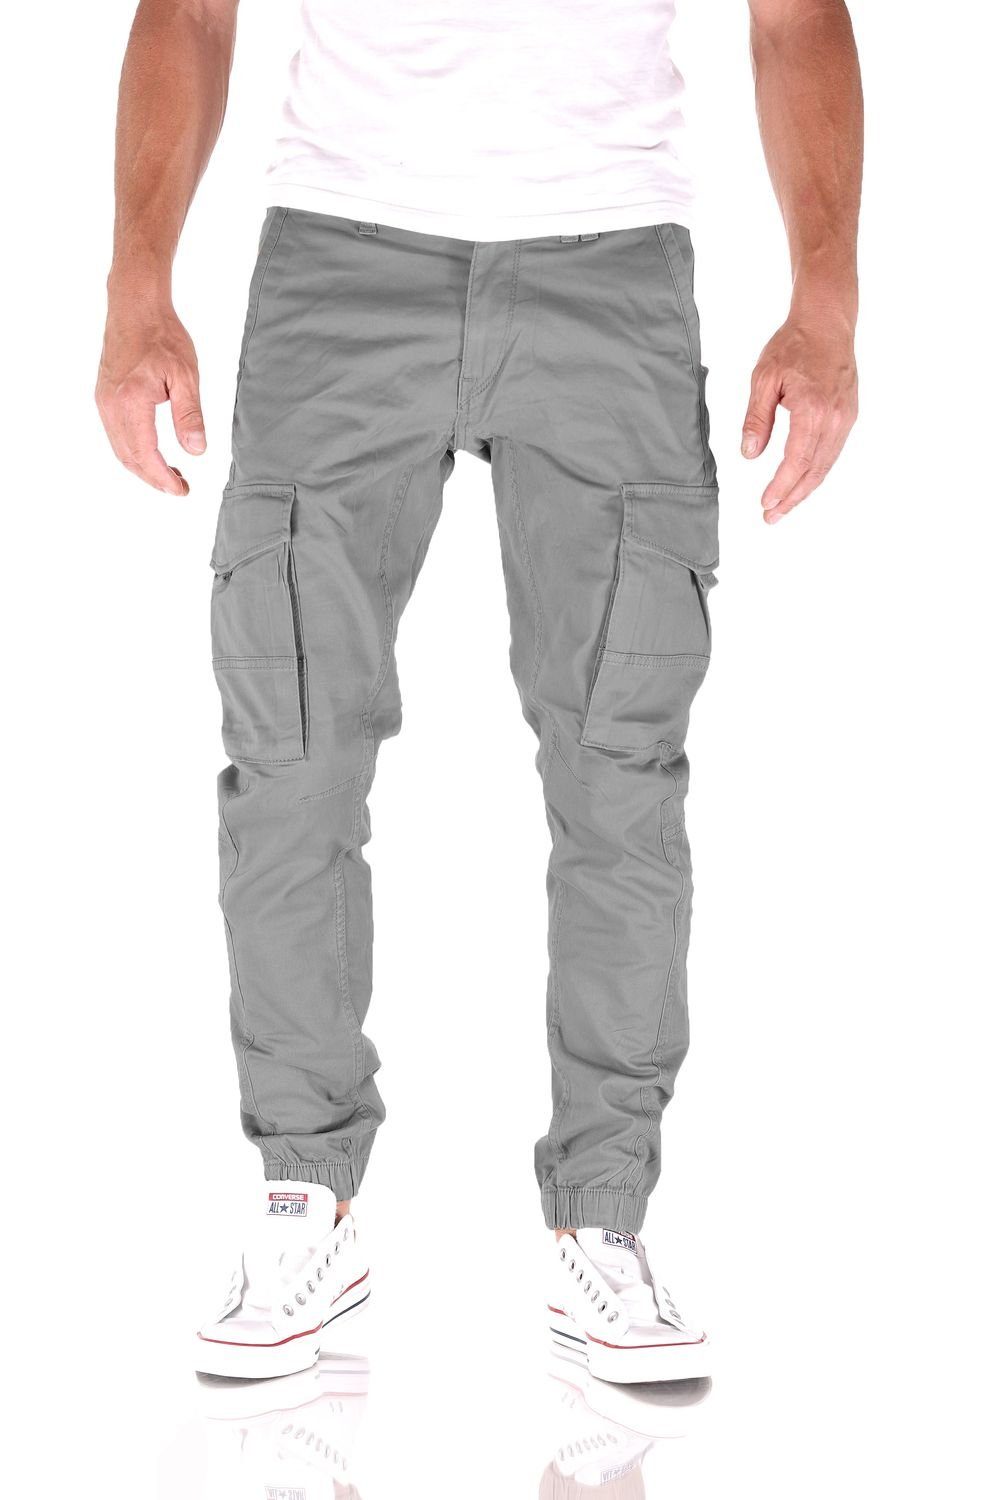 Jack & Jones Cargojeans Jack & Jones Paul Flake Cargo Tapered Fit Herren Jeans Hose Cool Gray | Jeans